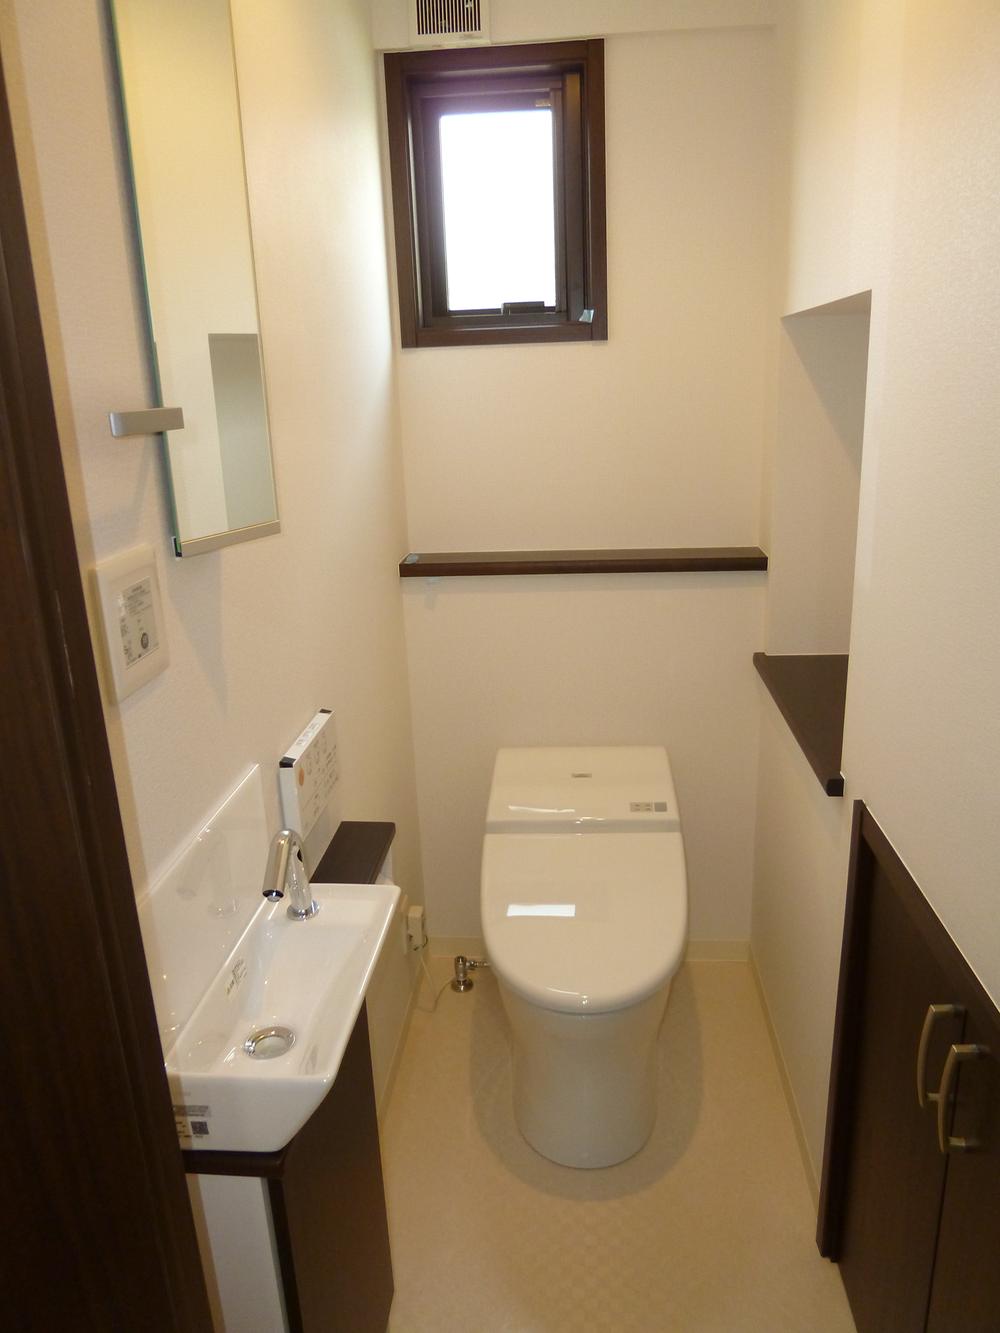 Building plan example (introspection photo). ○ ○ toilet